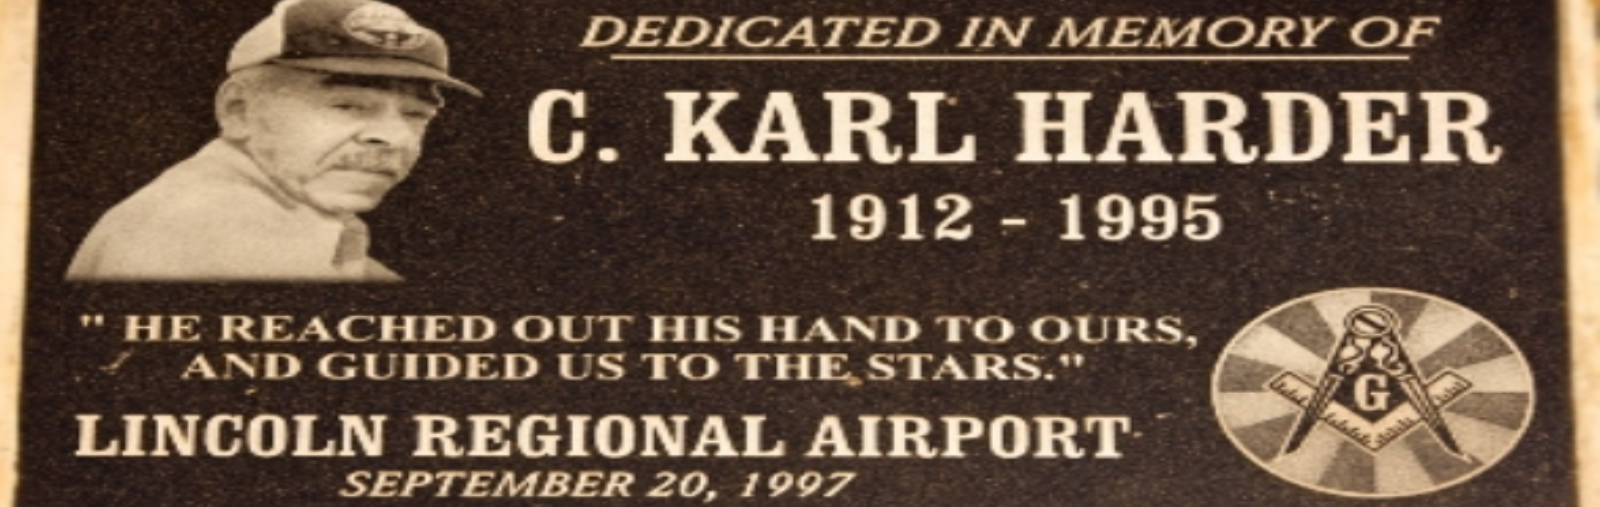 Airport Dedication plaque for Karl Harder